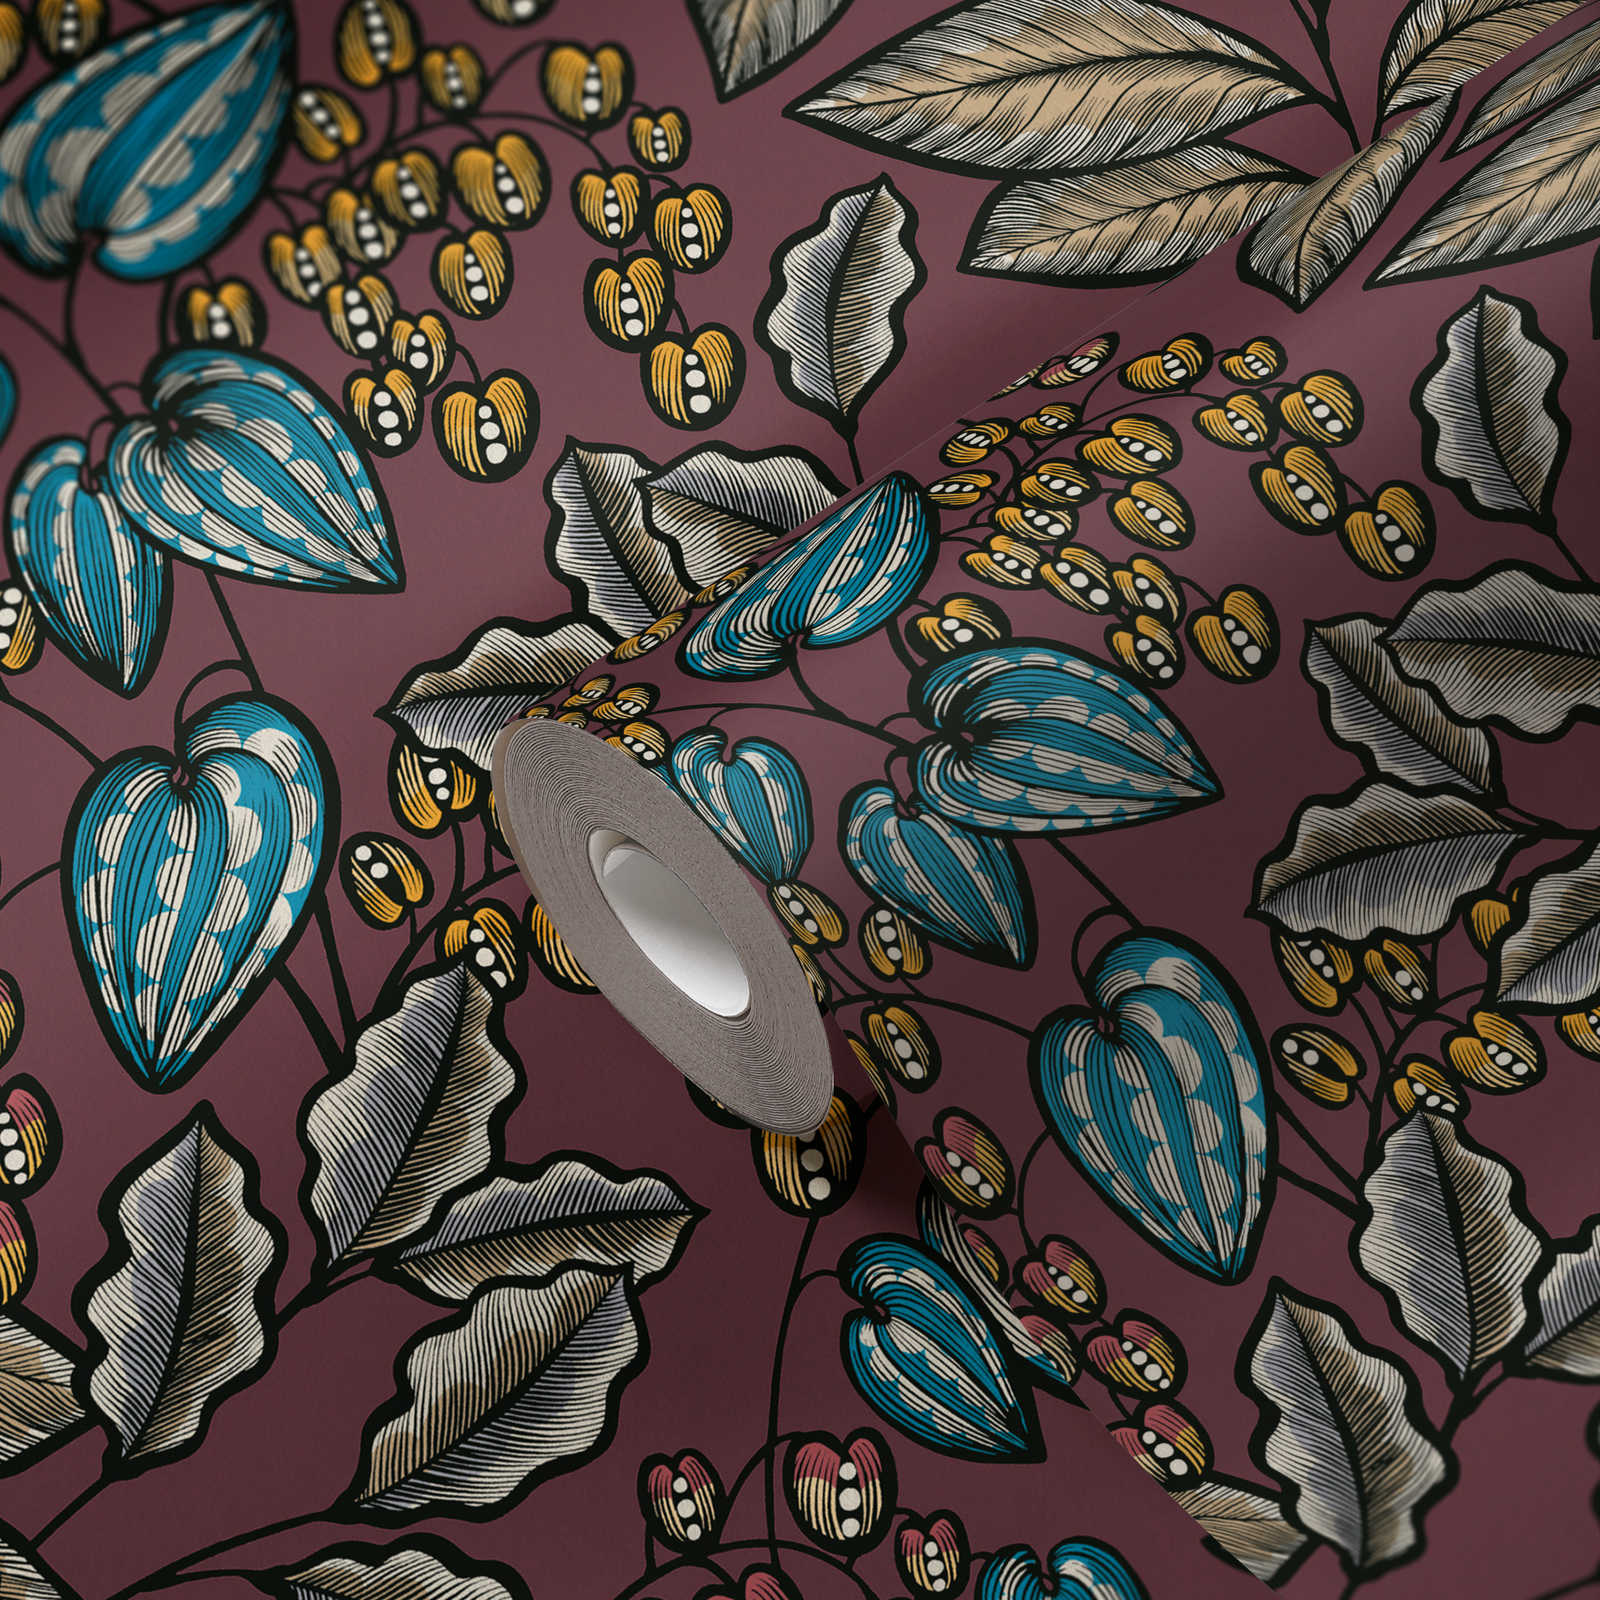             Florale Tapete Lila mit Blätter Print im Scandinavian Stil
        